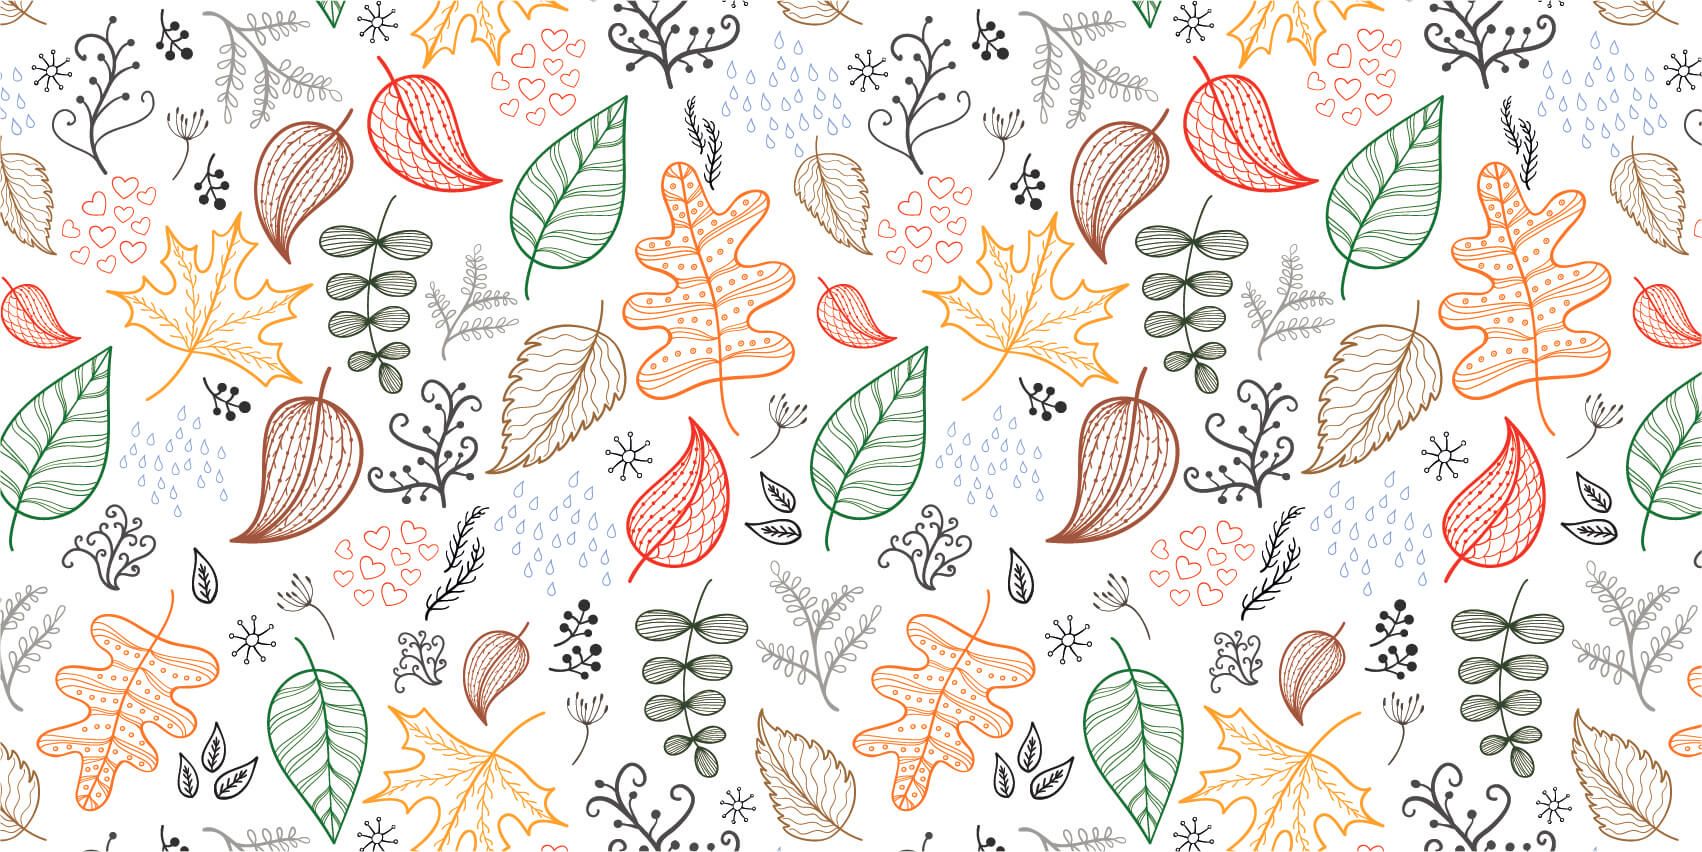 Leaves - Drawn autumn leaves - Hobby room